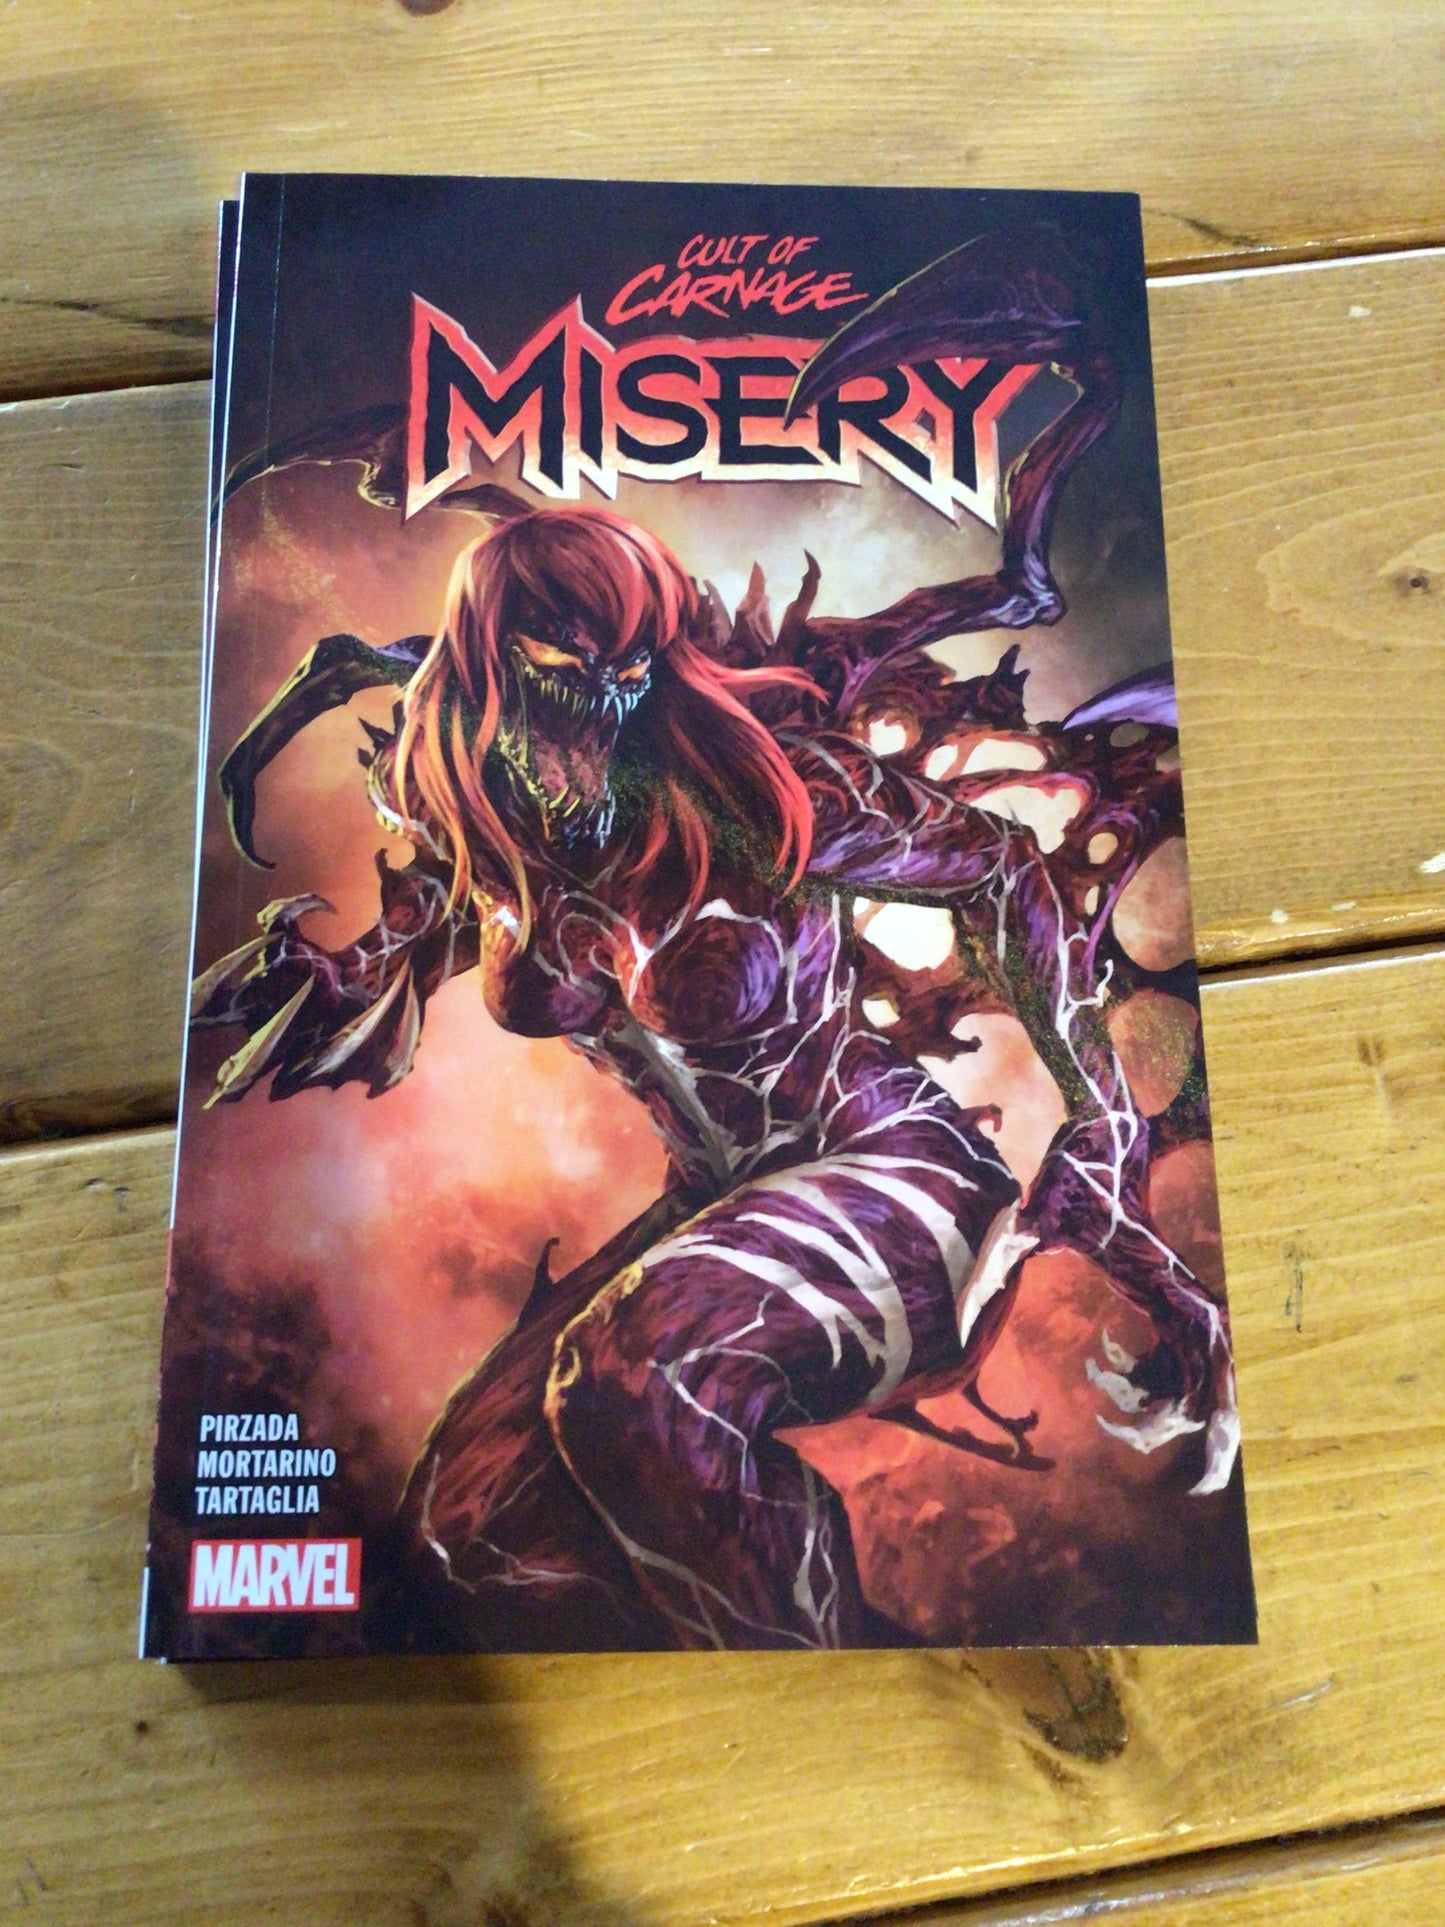 Marvel - Cult of Carnage: Misery - Graphic Novel